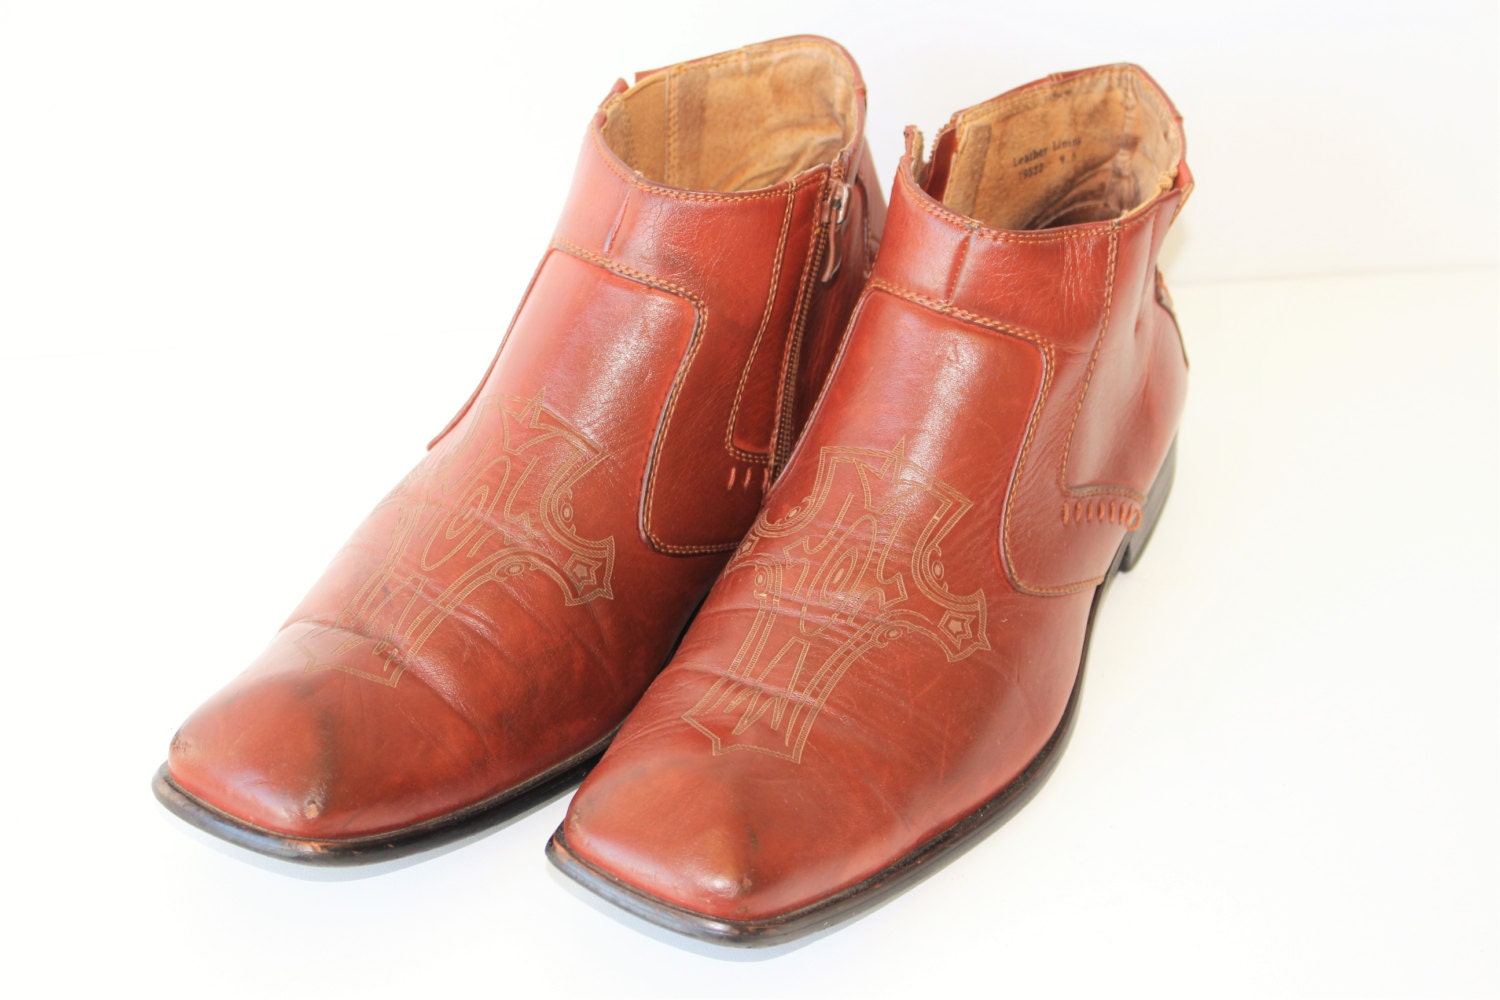 Zapatos Zapatos para hombre Botas Botas de vestir Botas Jeffery west con tachuelas negras talla uk 8 